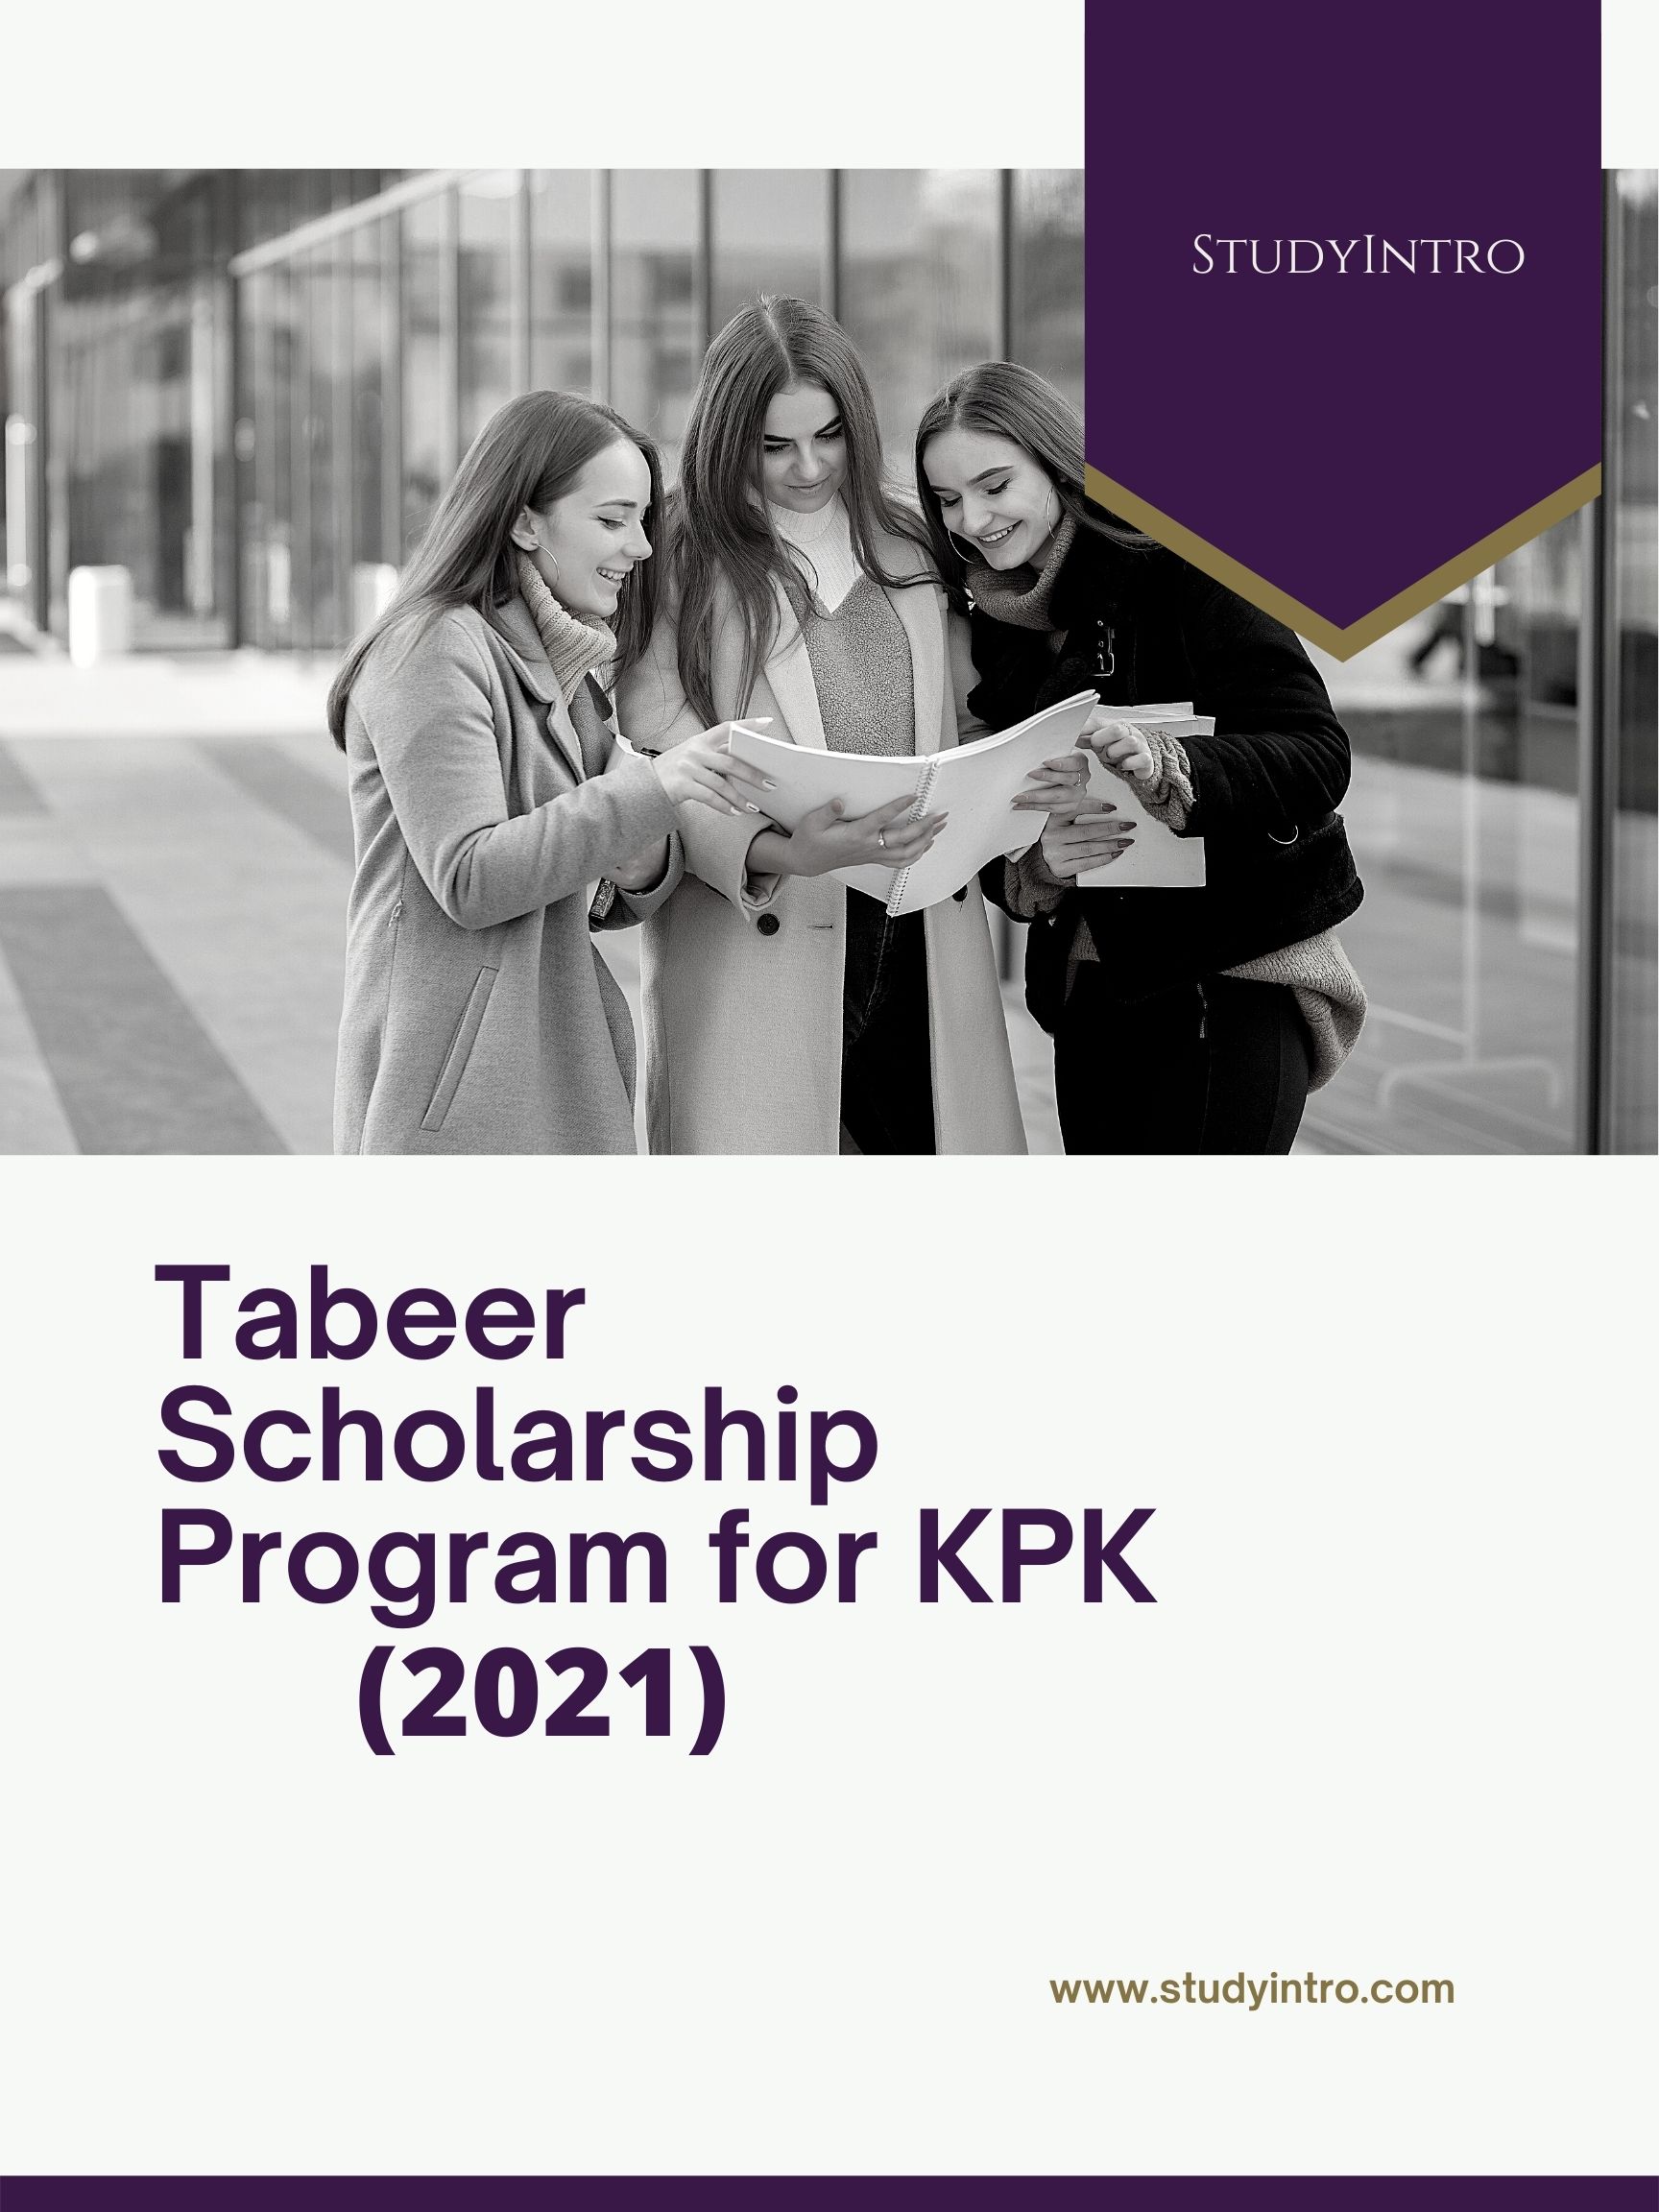 Tabeer Scholarships